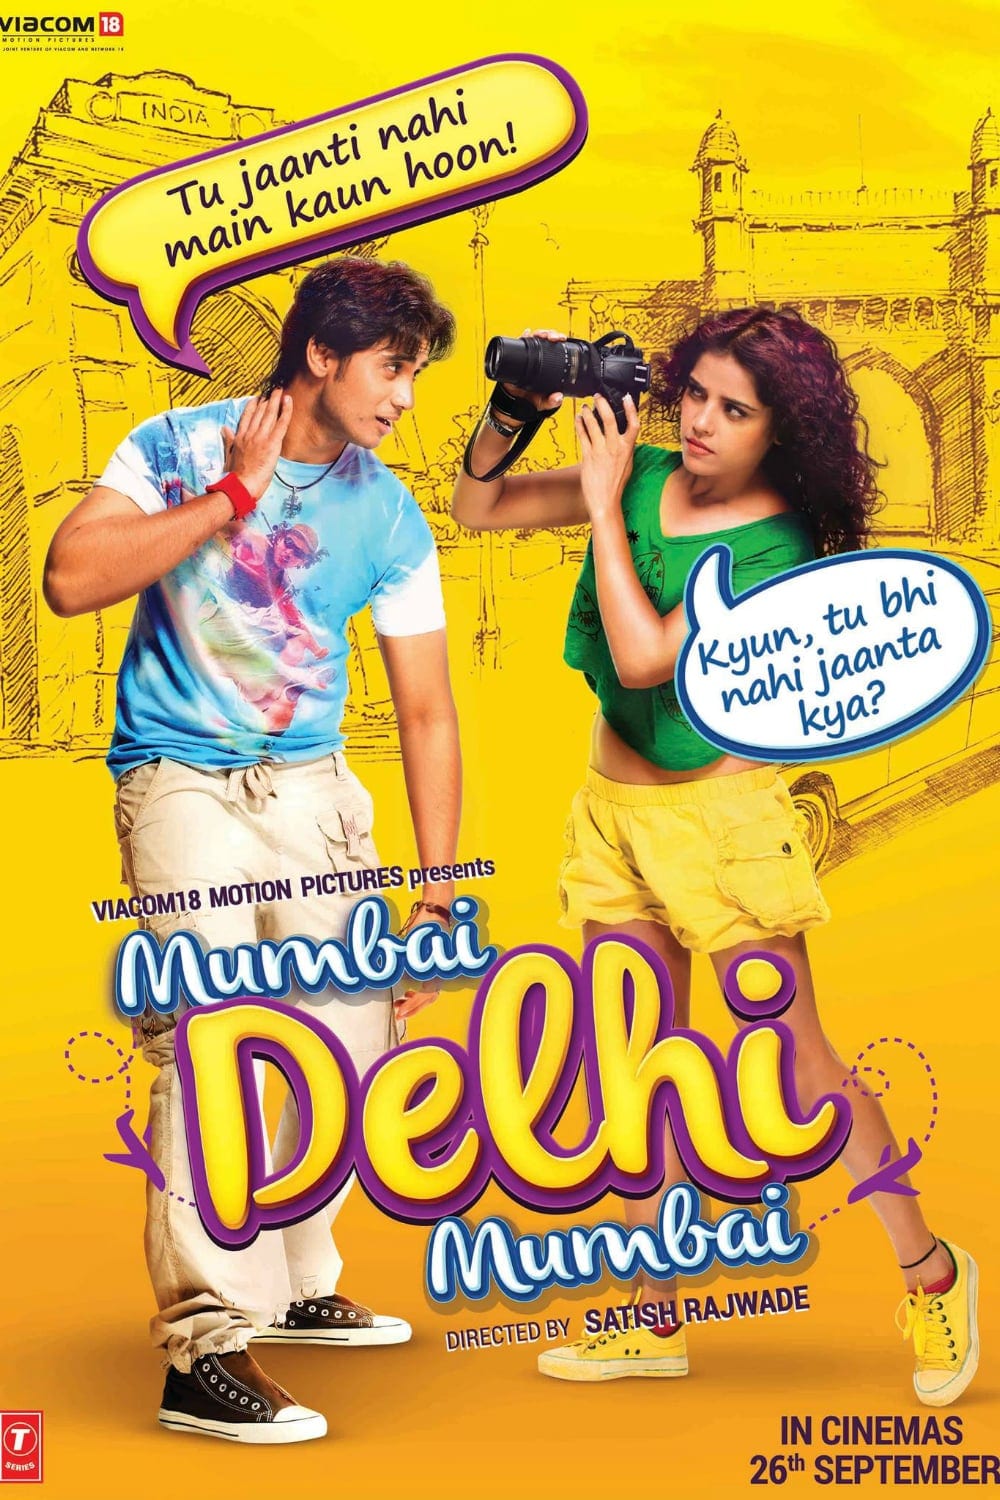 Poster for the movie "Mumbai Delhi Mumbai"